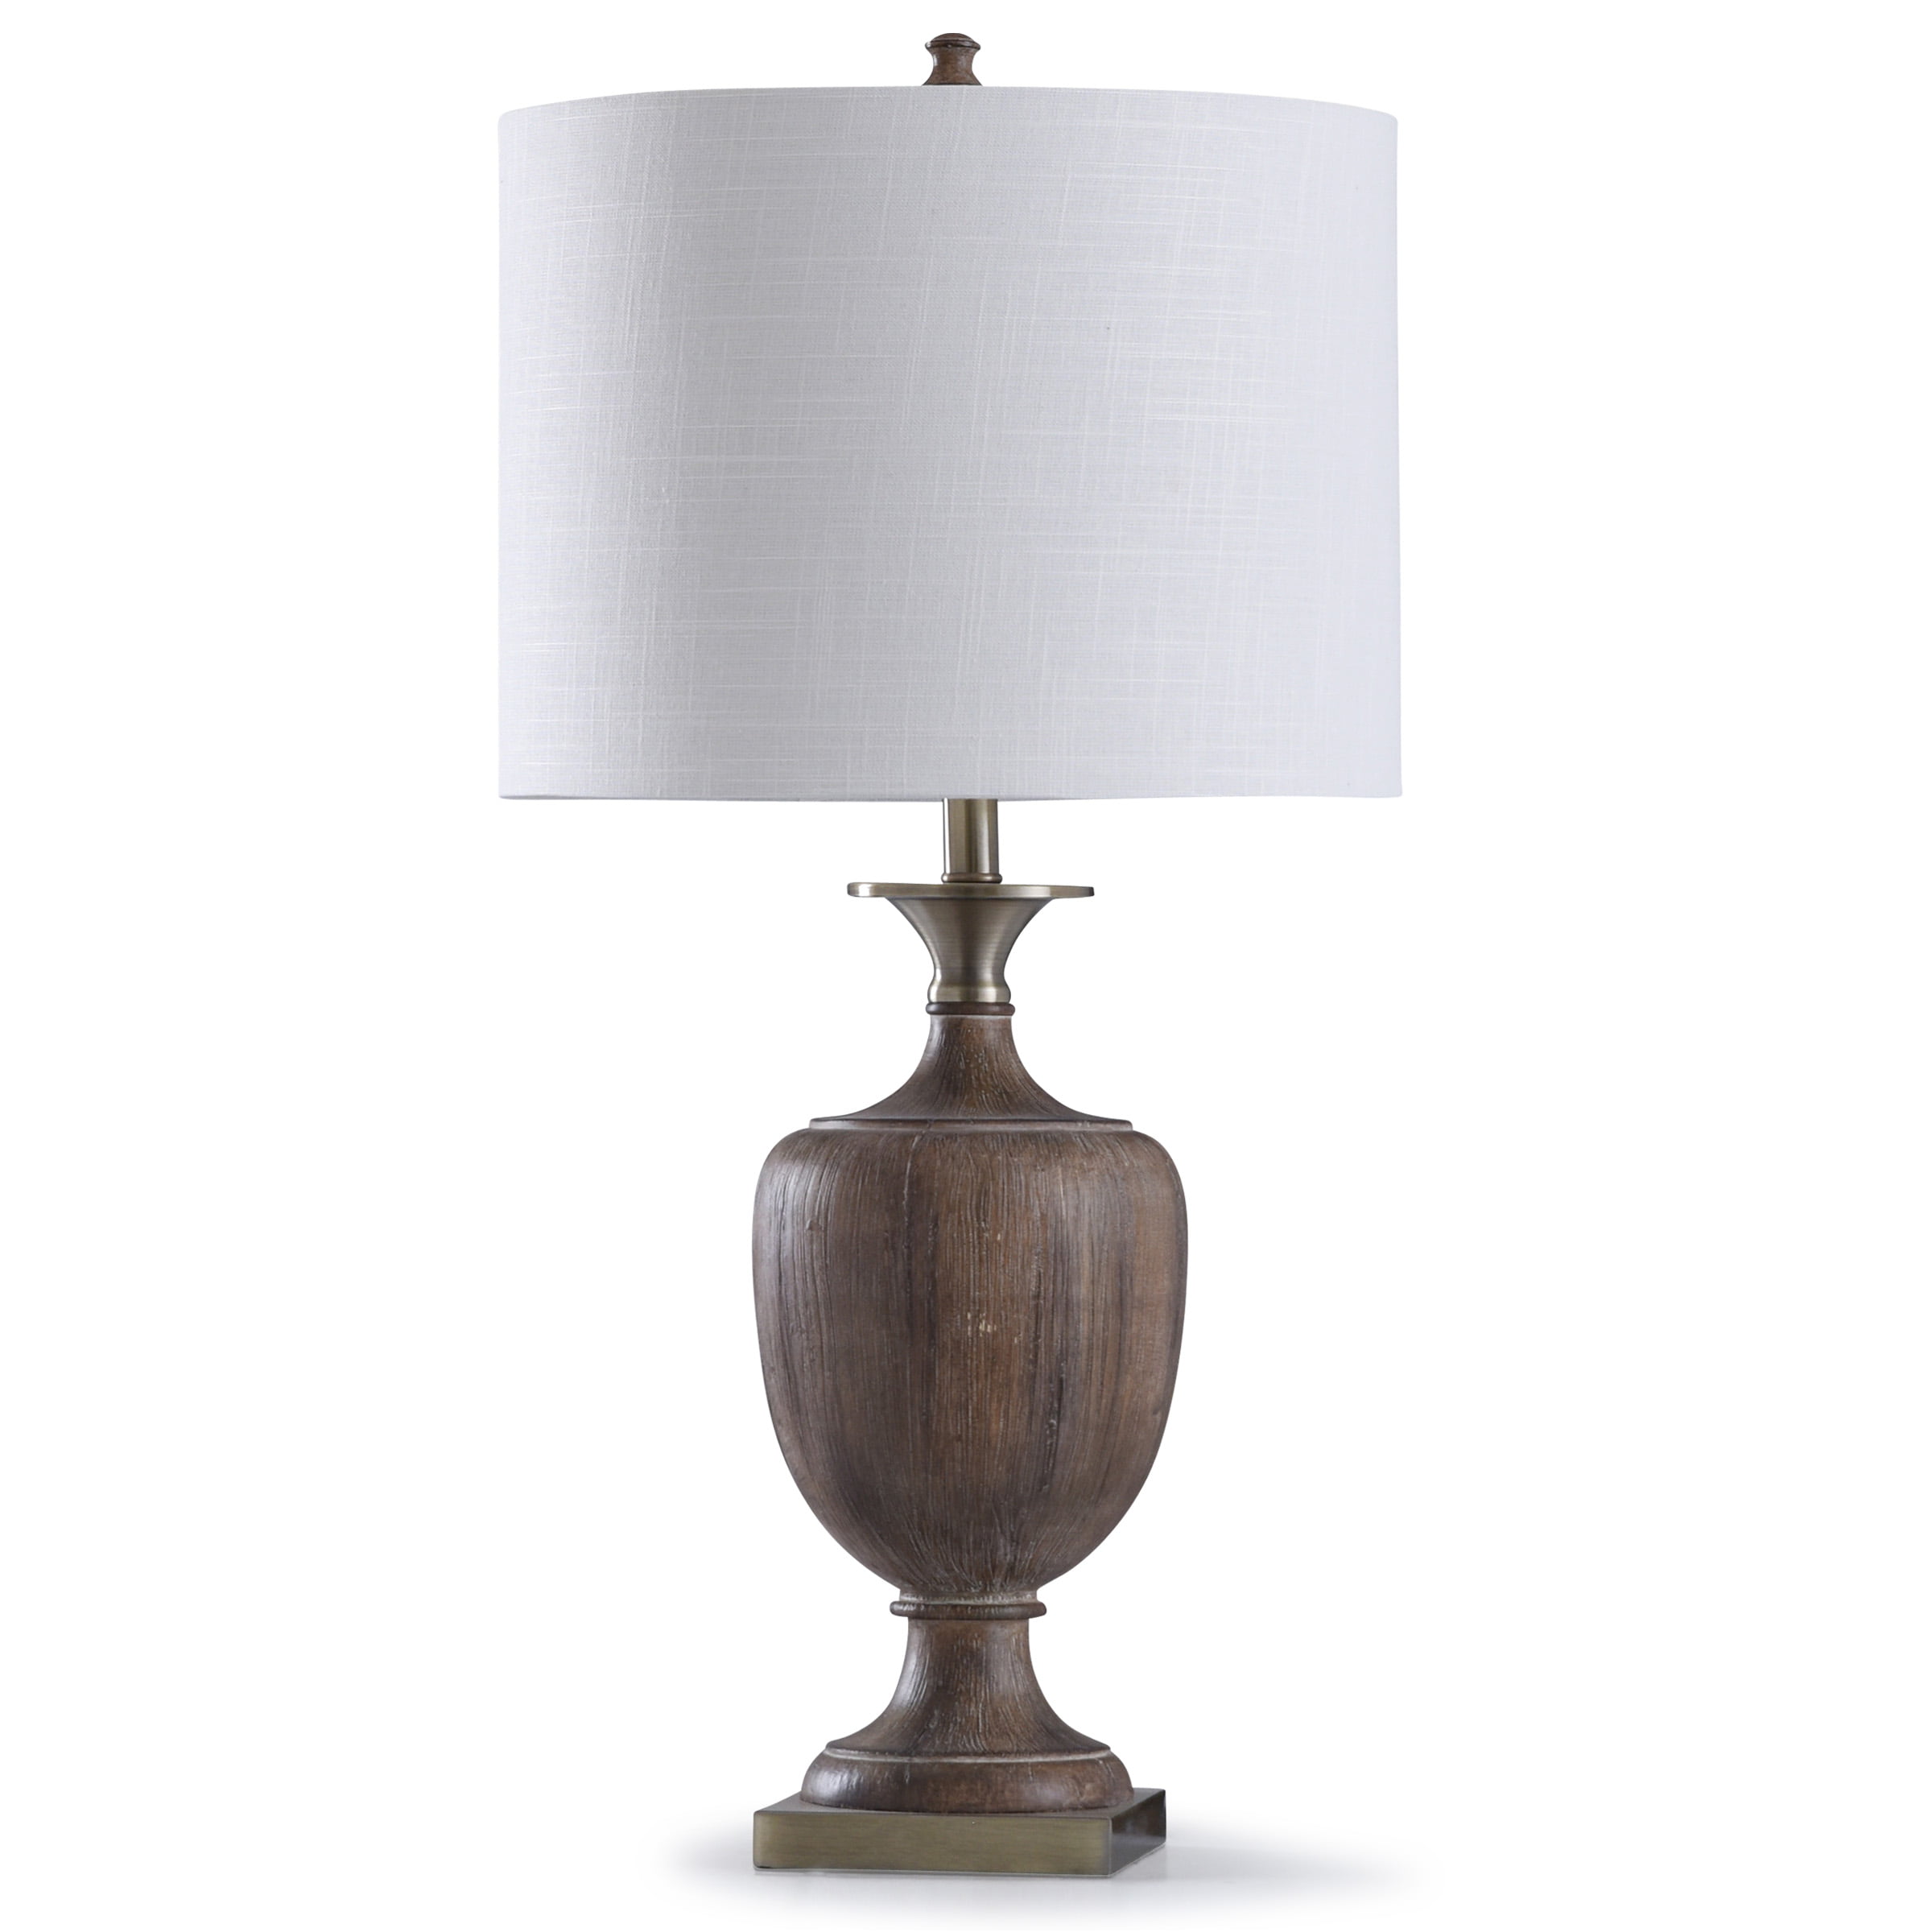 Roanoke Wood Grain Textured Urn Table Lamp with Drum Shade Wood Grain Textured Finish with